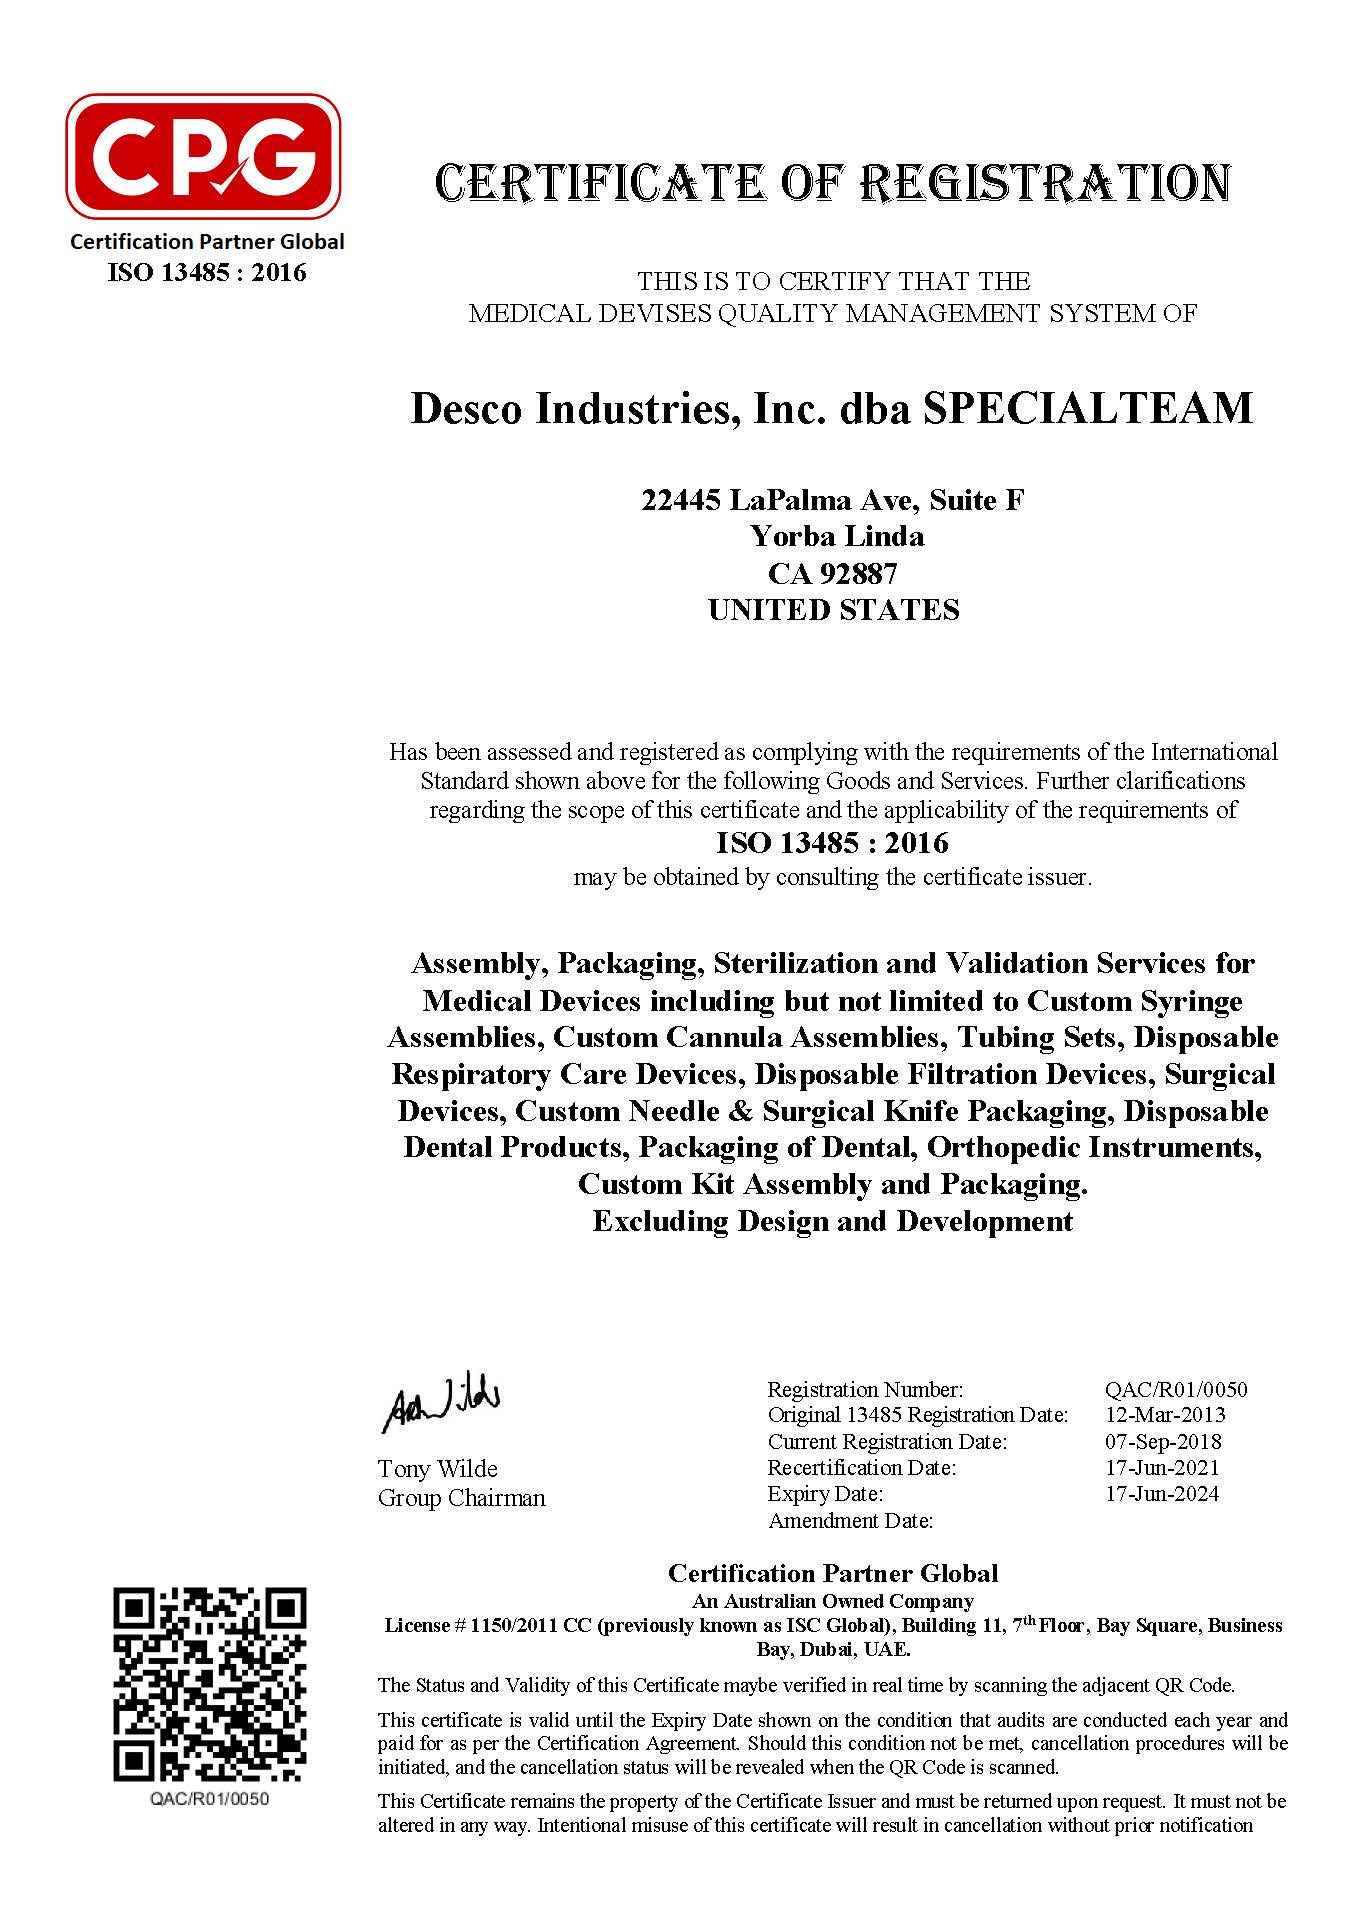 ISO 13485:2021 Certificate SpecialTeam